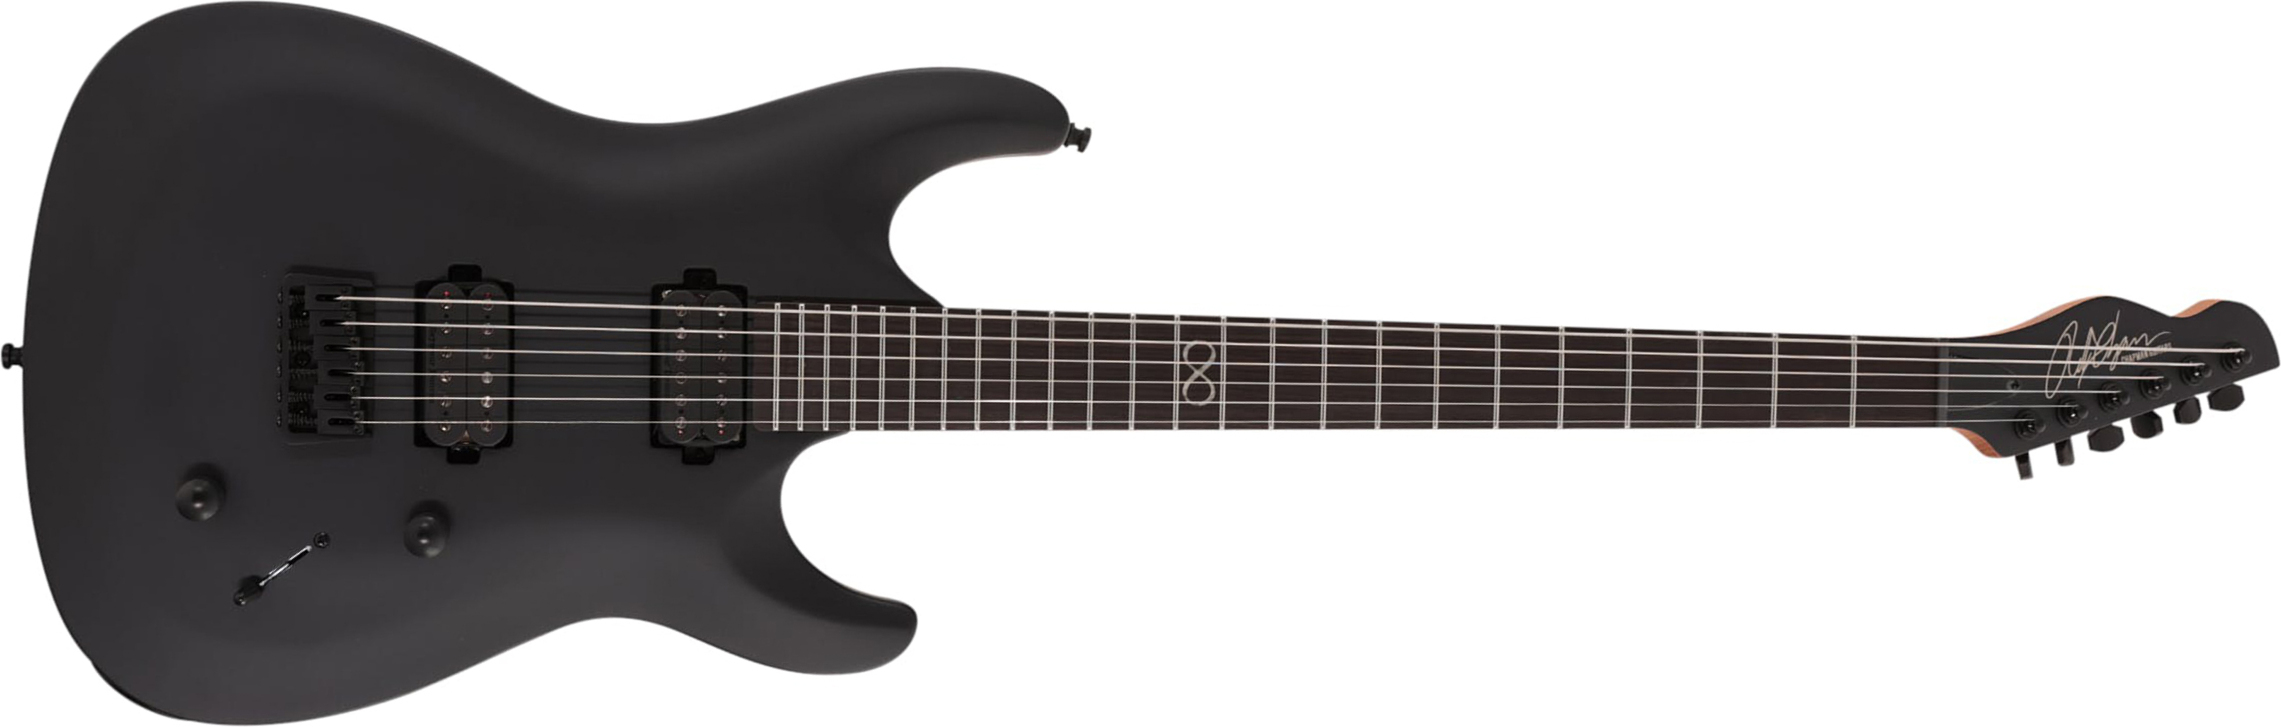 Chapman Guitars Ml1 Modern Baritone Pro 2h Seymour Duncan  Ht Eb - Cyber Black - Baritone guitar - Main picture